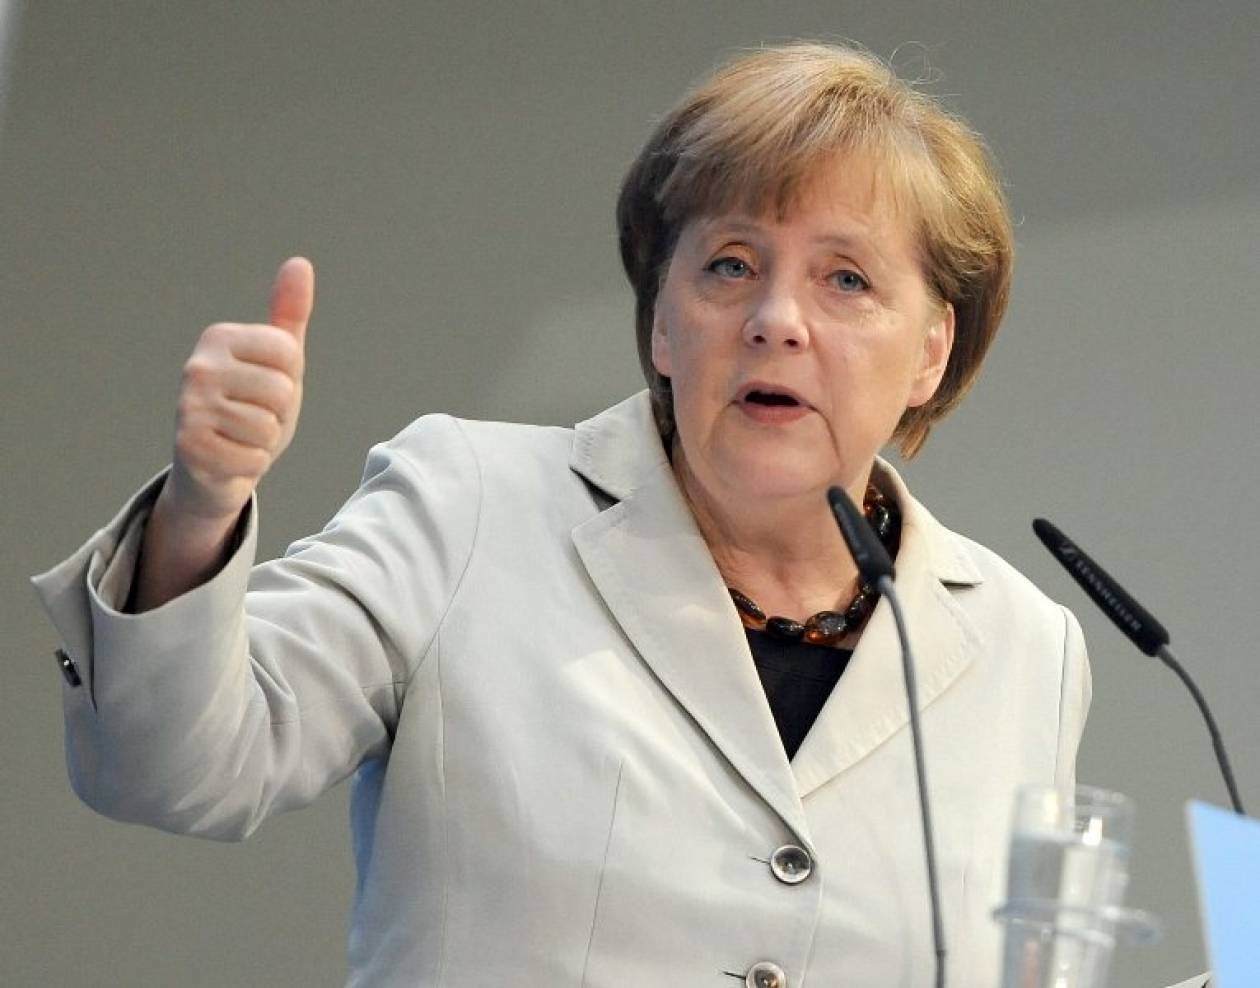 G20: Πίεση στη Γερμανία για μέτρα ανάπτυξης